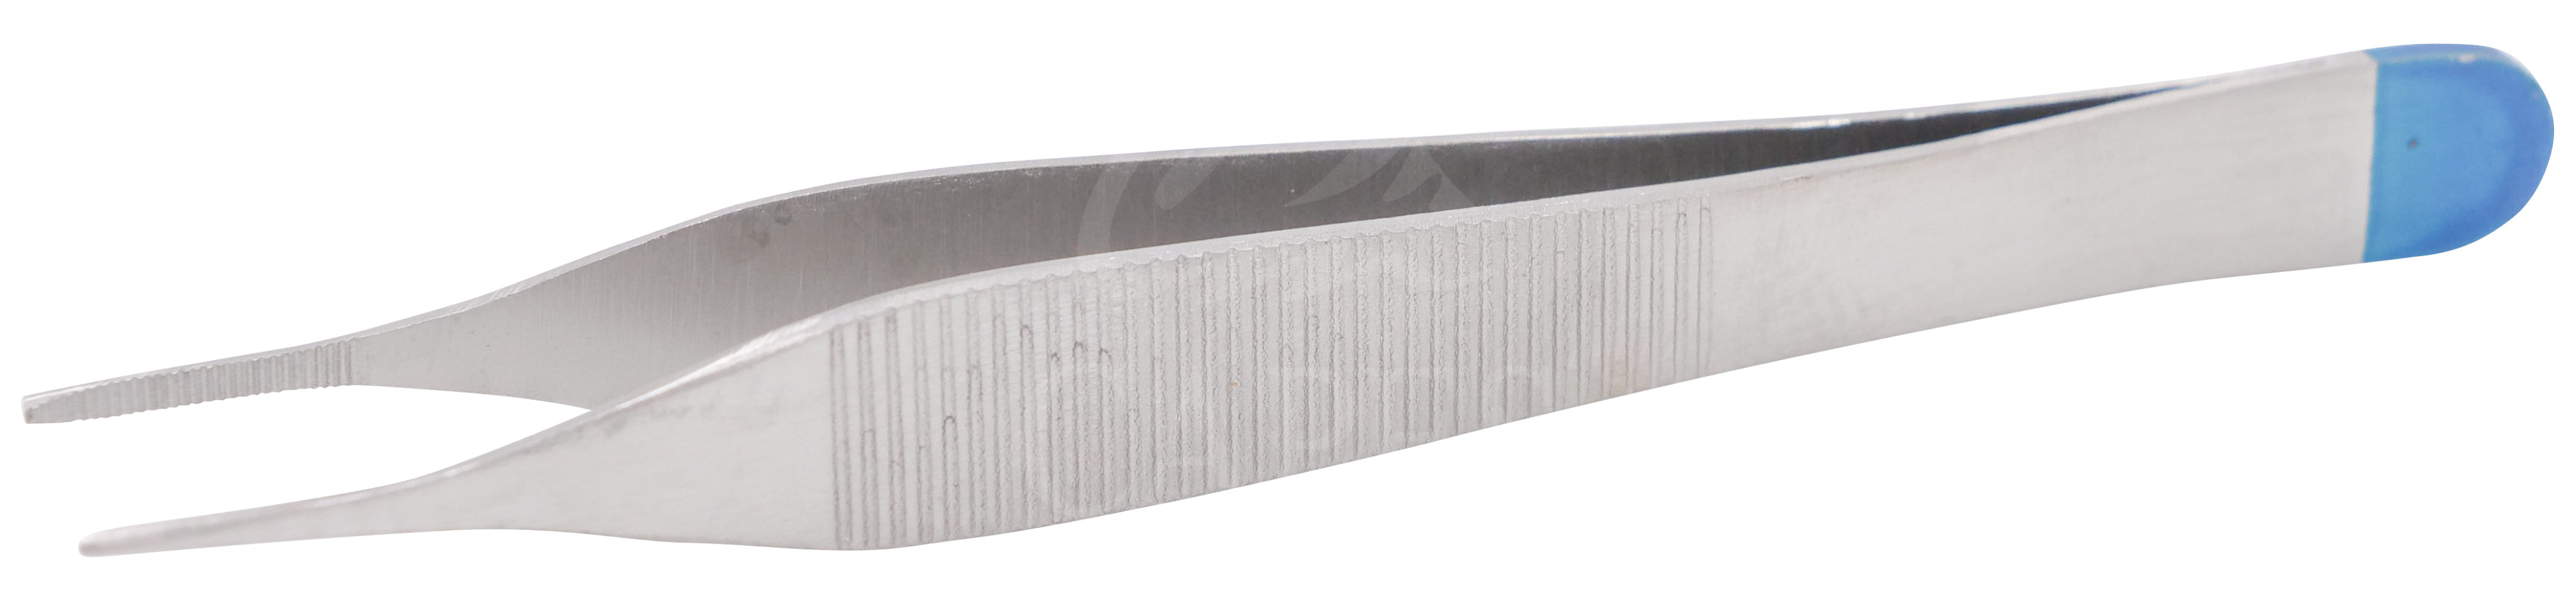 Bamford Micro-Adson Forcep Plain STERILE 12.5cm